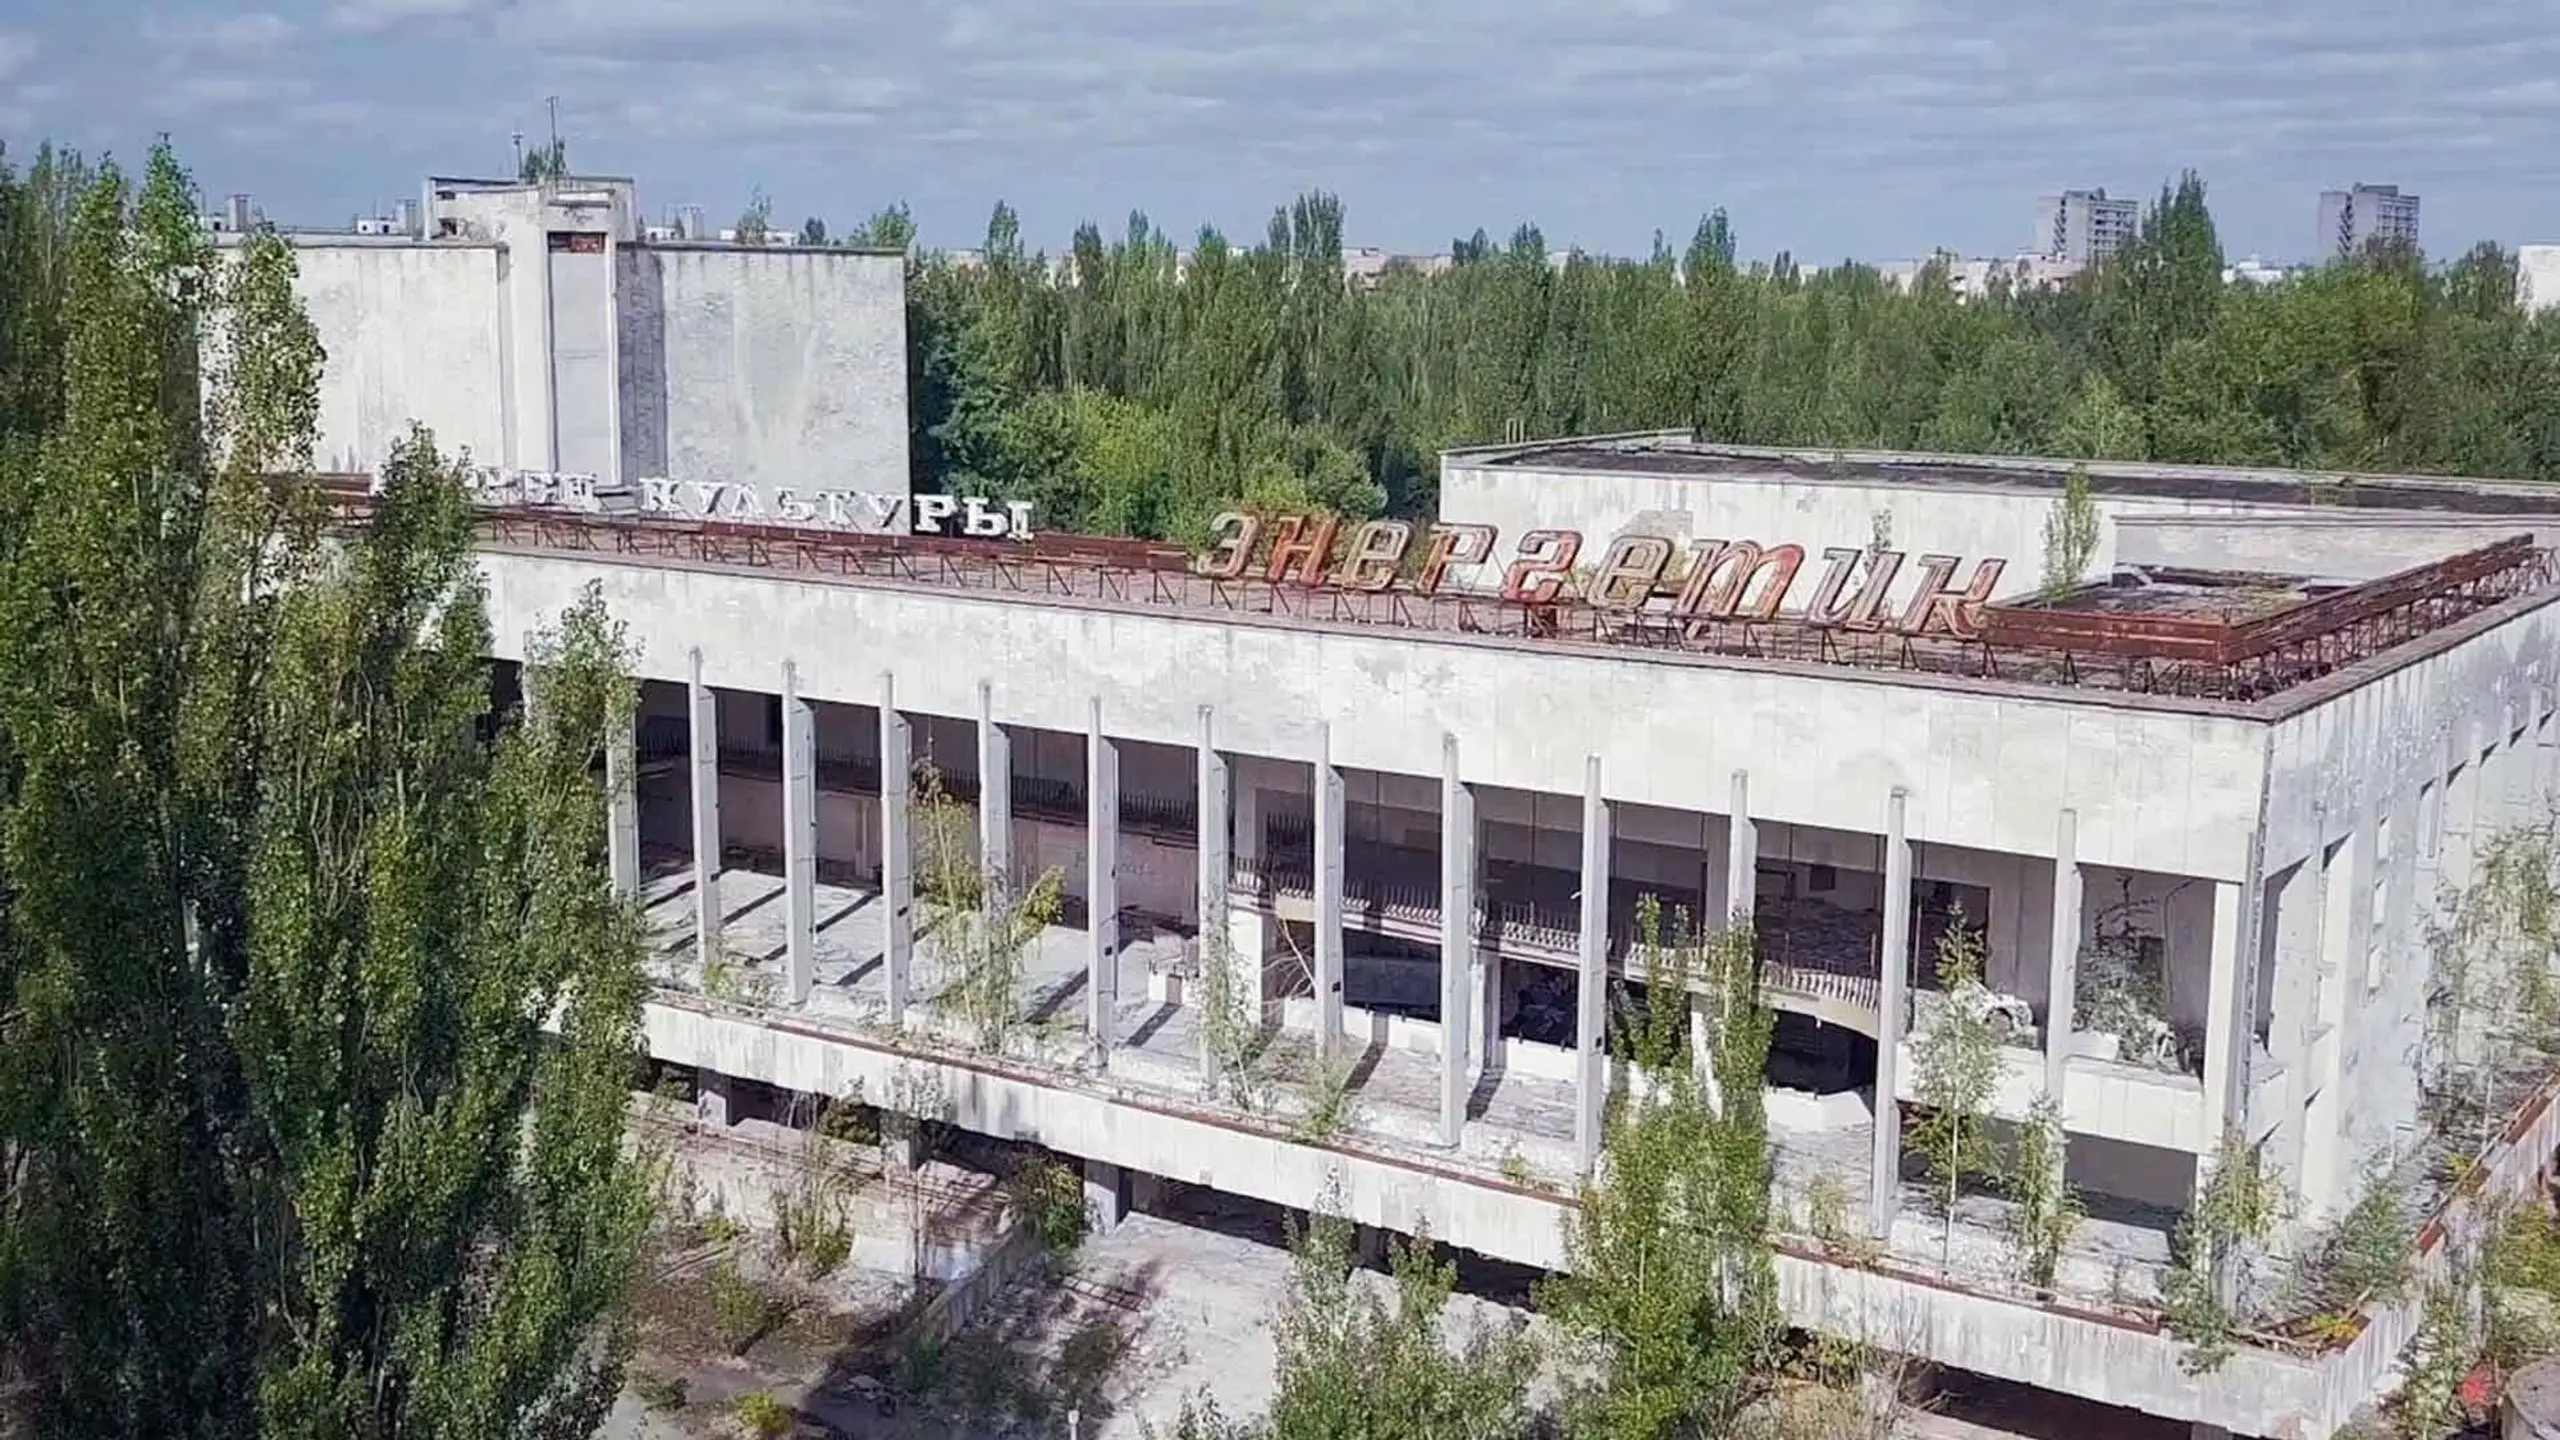 Stalking Chernobyl: Exploration After Apocalypse